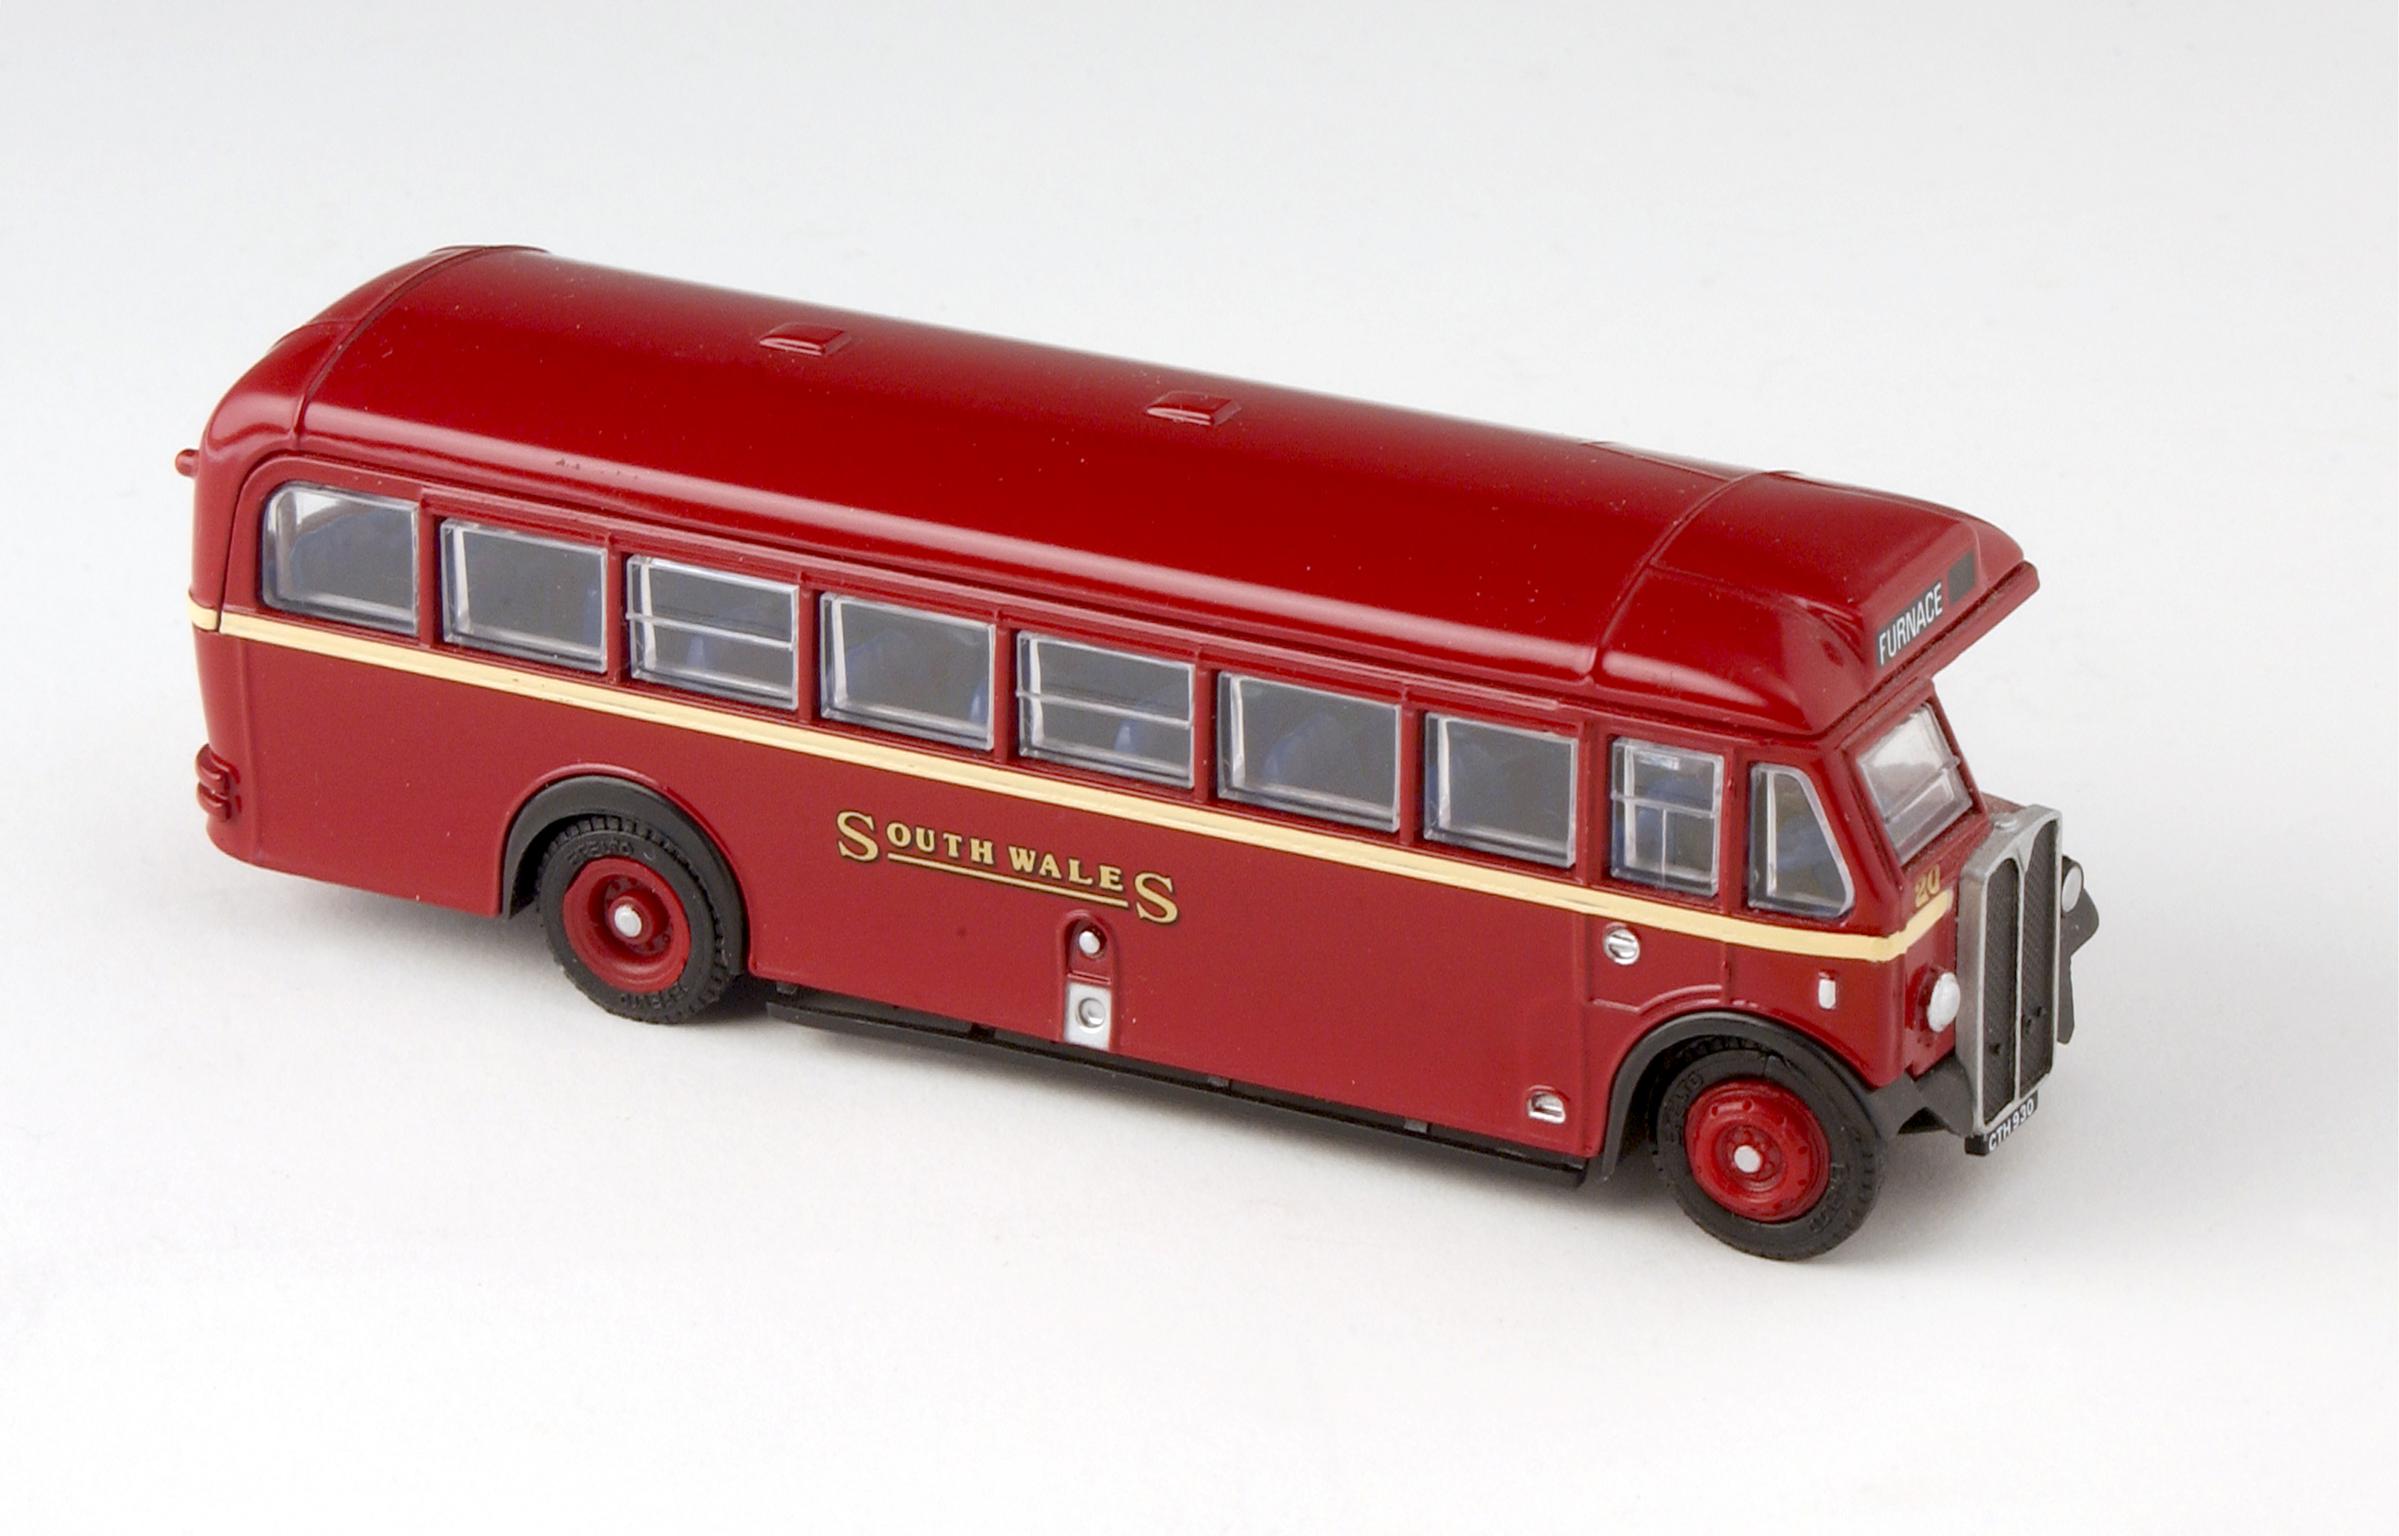 South Wales, AEC Regal single deck bus model